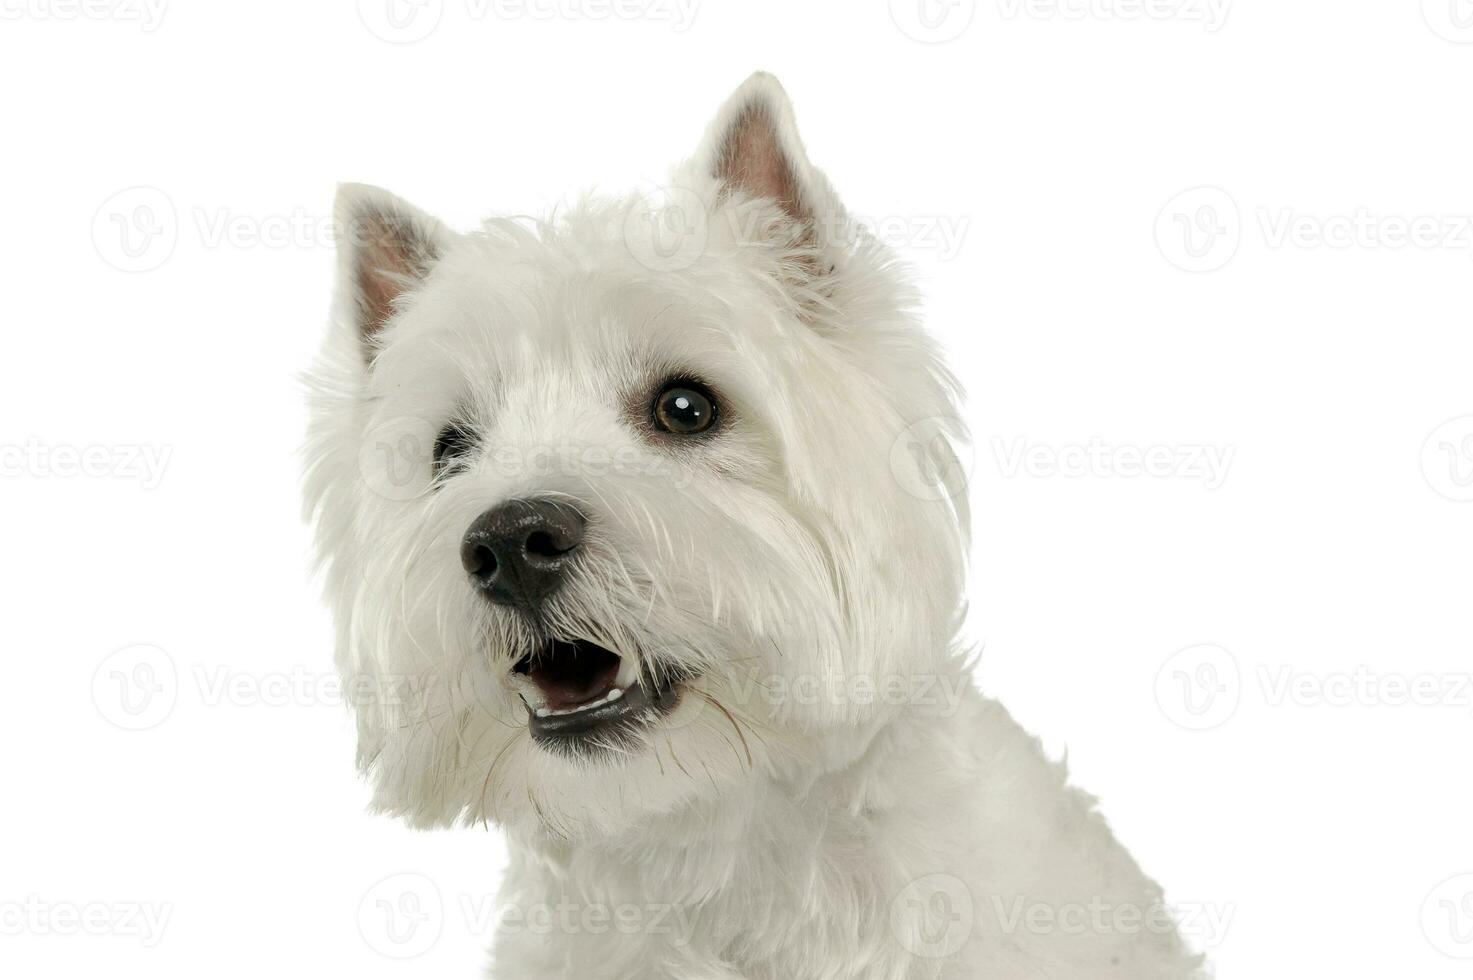 West Highland White Terrier portrait in a white studio photo